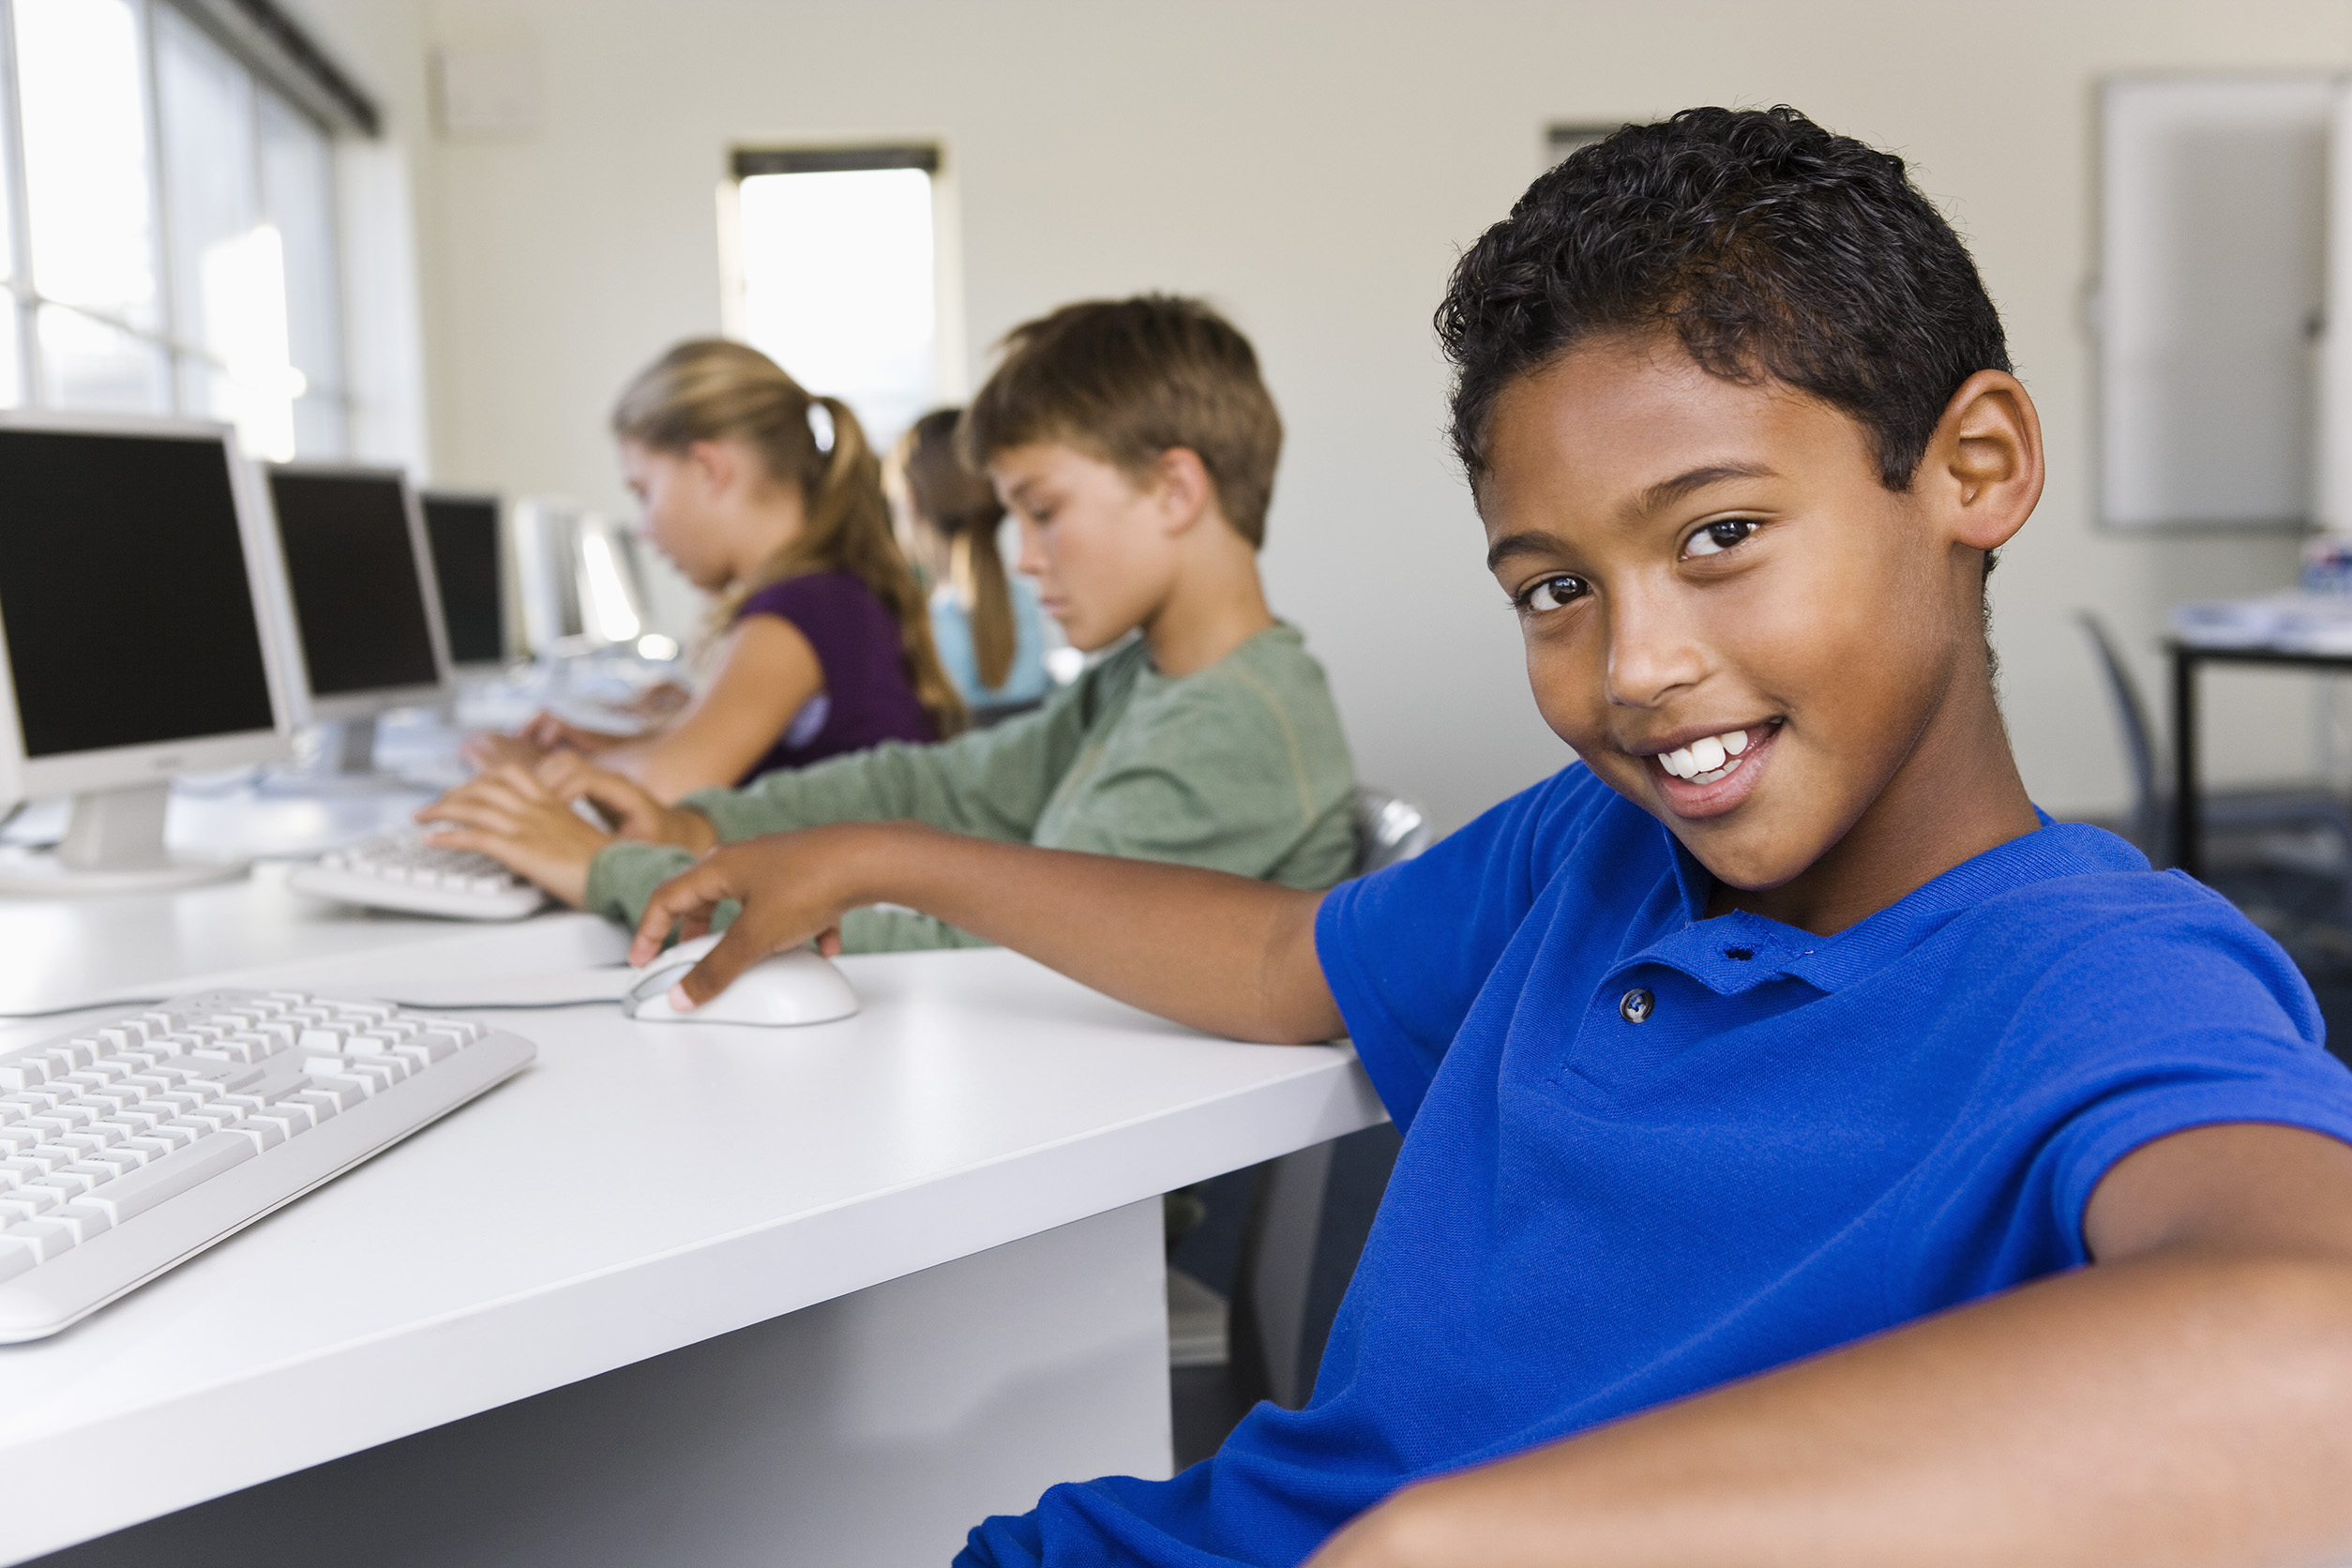 It Kids. Information Technology is Kids. Using Technologies for Kids. It Schools 3d. Get new skills